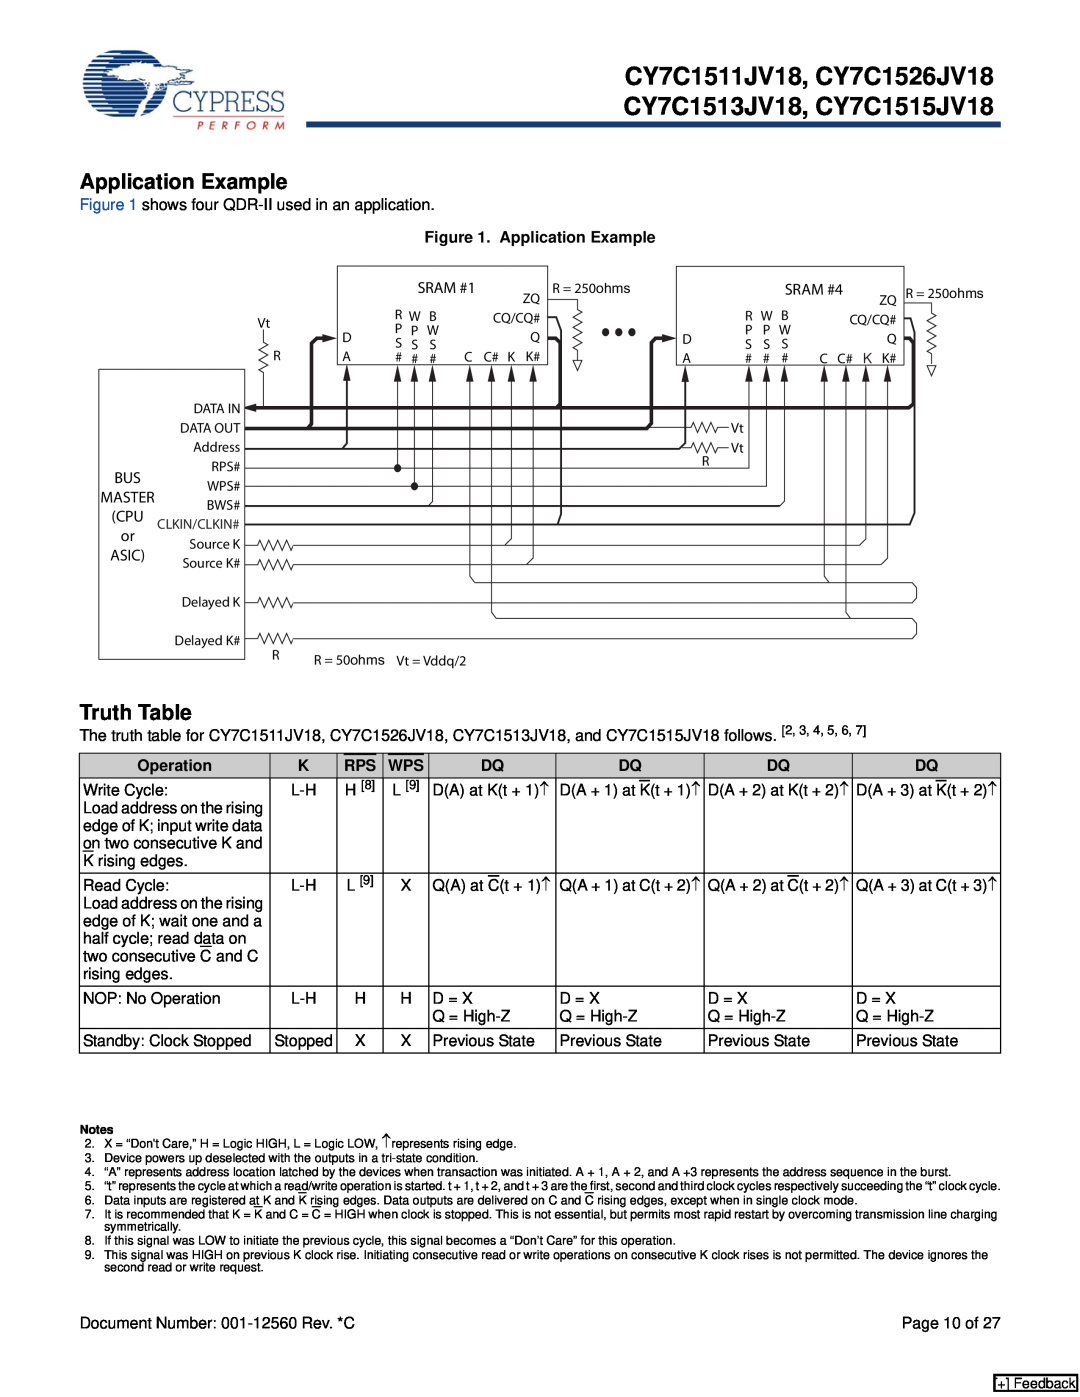 Cypress manual CY7C1511JV18, CY7C1526JV18, Application Example, Truth Table, CY7C1513JV18, CY7C1515JV18, Asic 